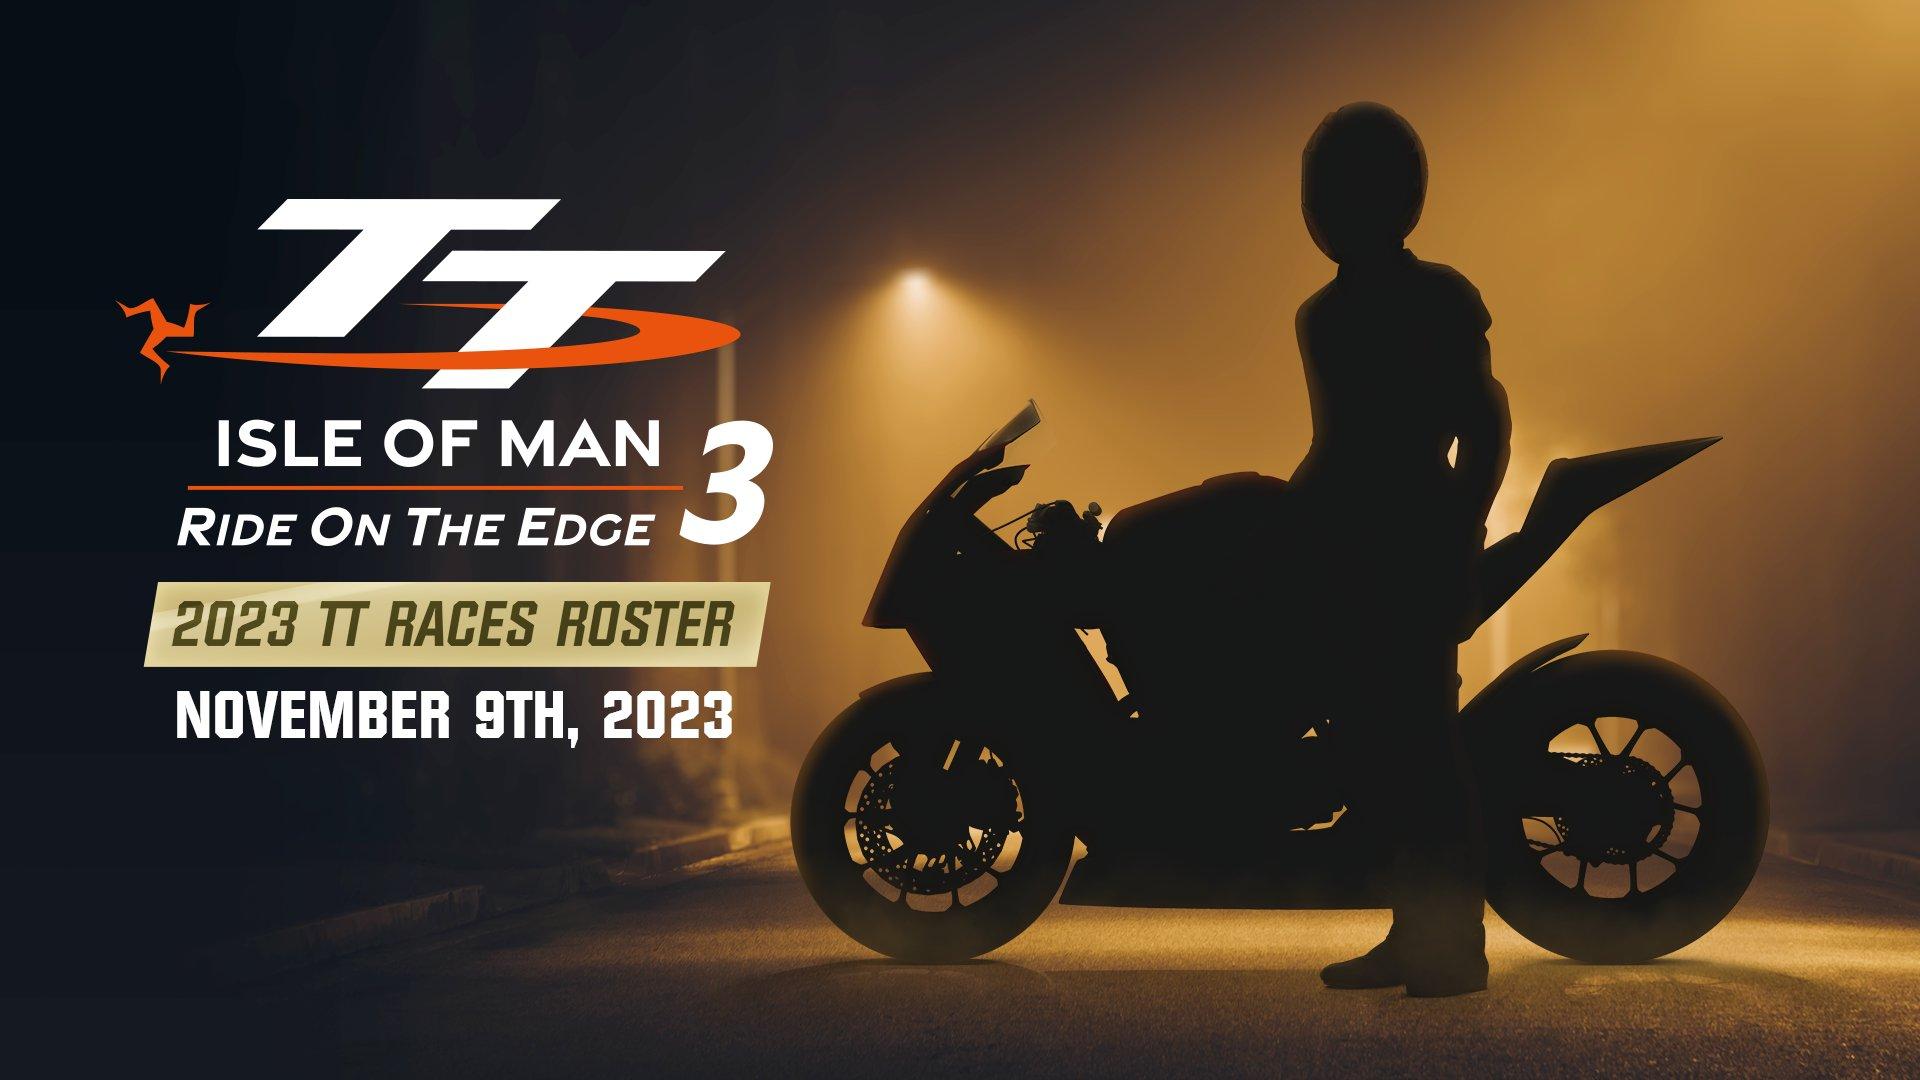 Novo jogo TT Isle of Man: Ride on the Edge 3 - MotoNews - Andar de